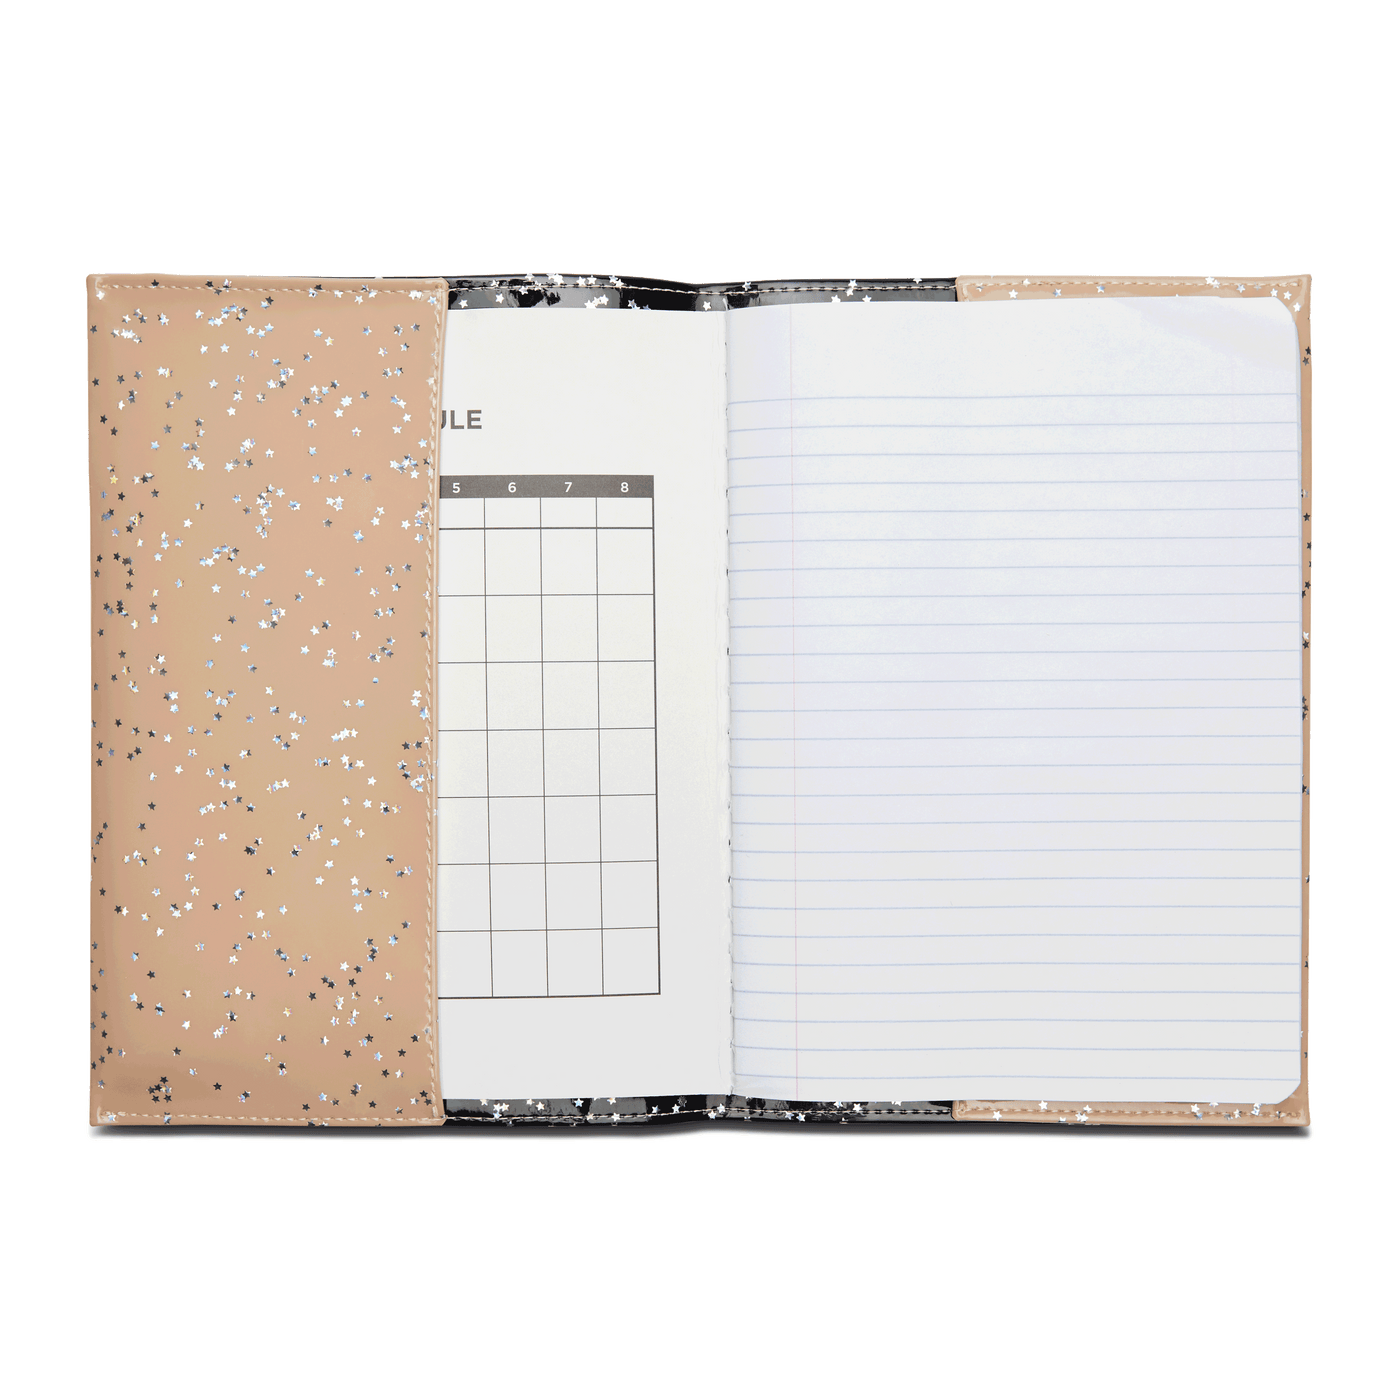 Consuela Dreamy Notebook